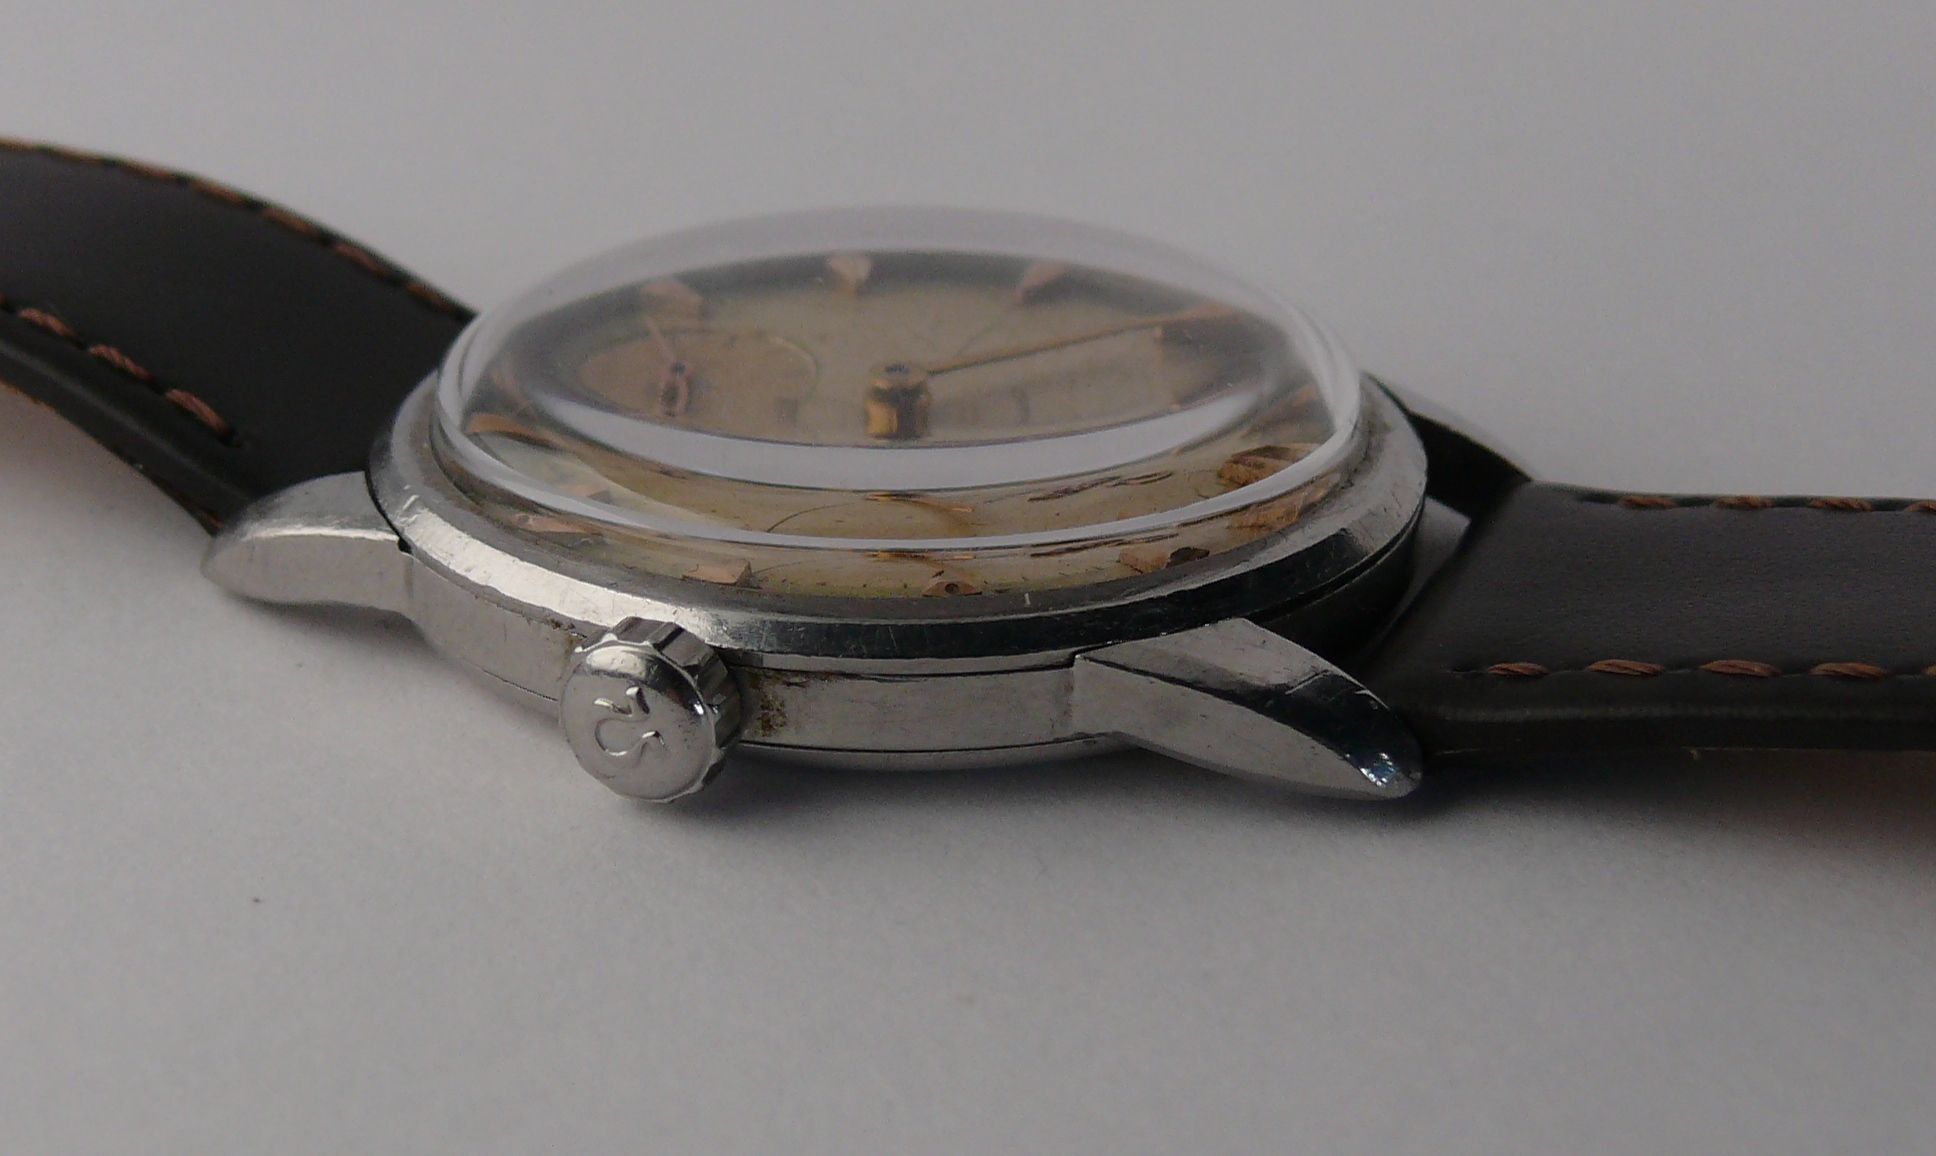 1959 Vintage Gents Omega Geneva Manual Wind Wristwatch Ref 2903. Original dial shows even patina - Image 2 of 7